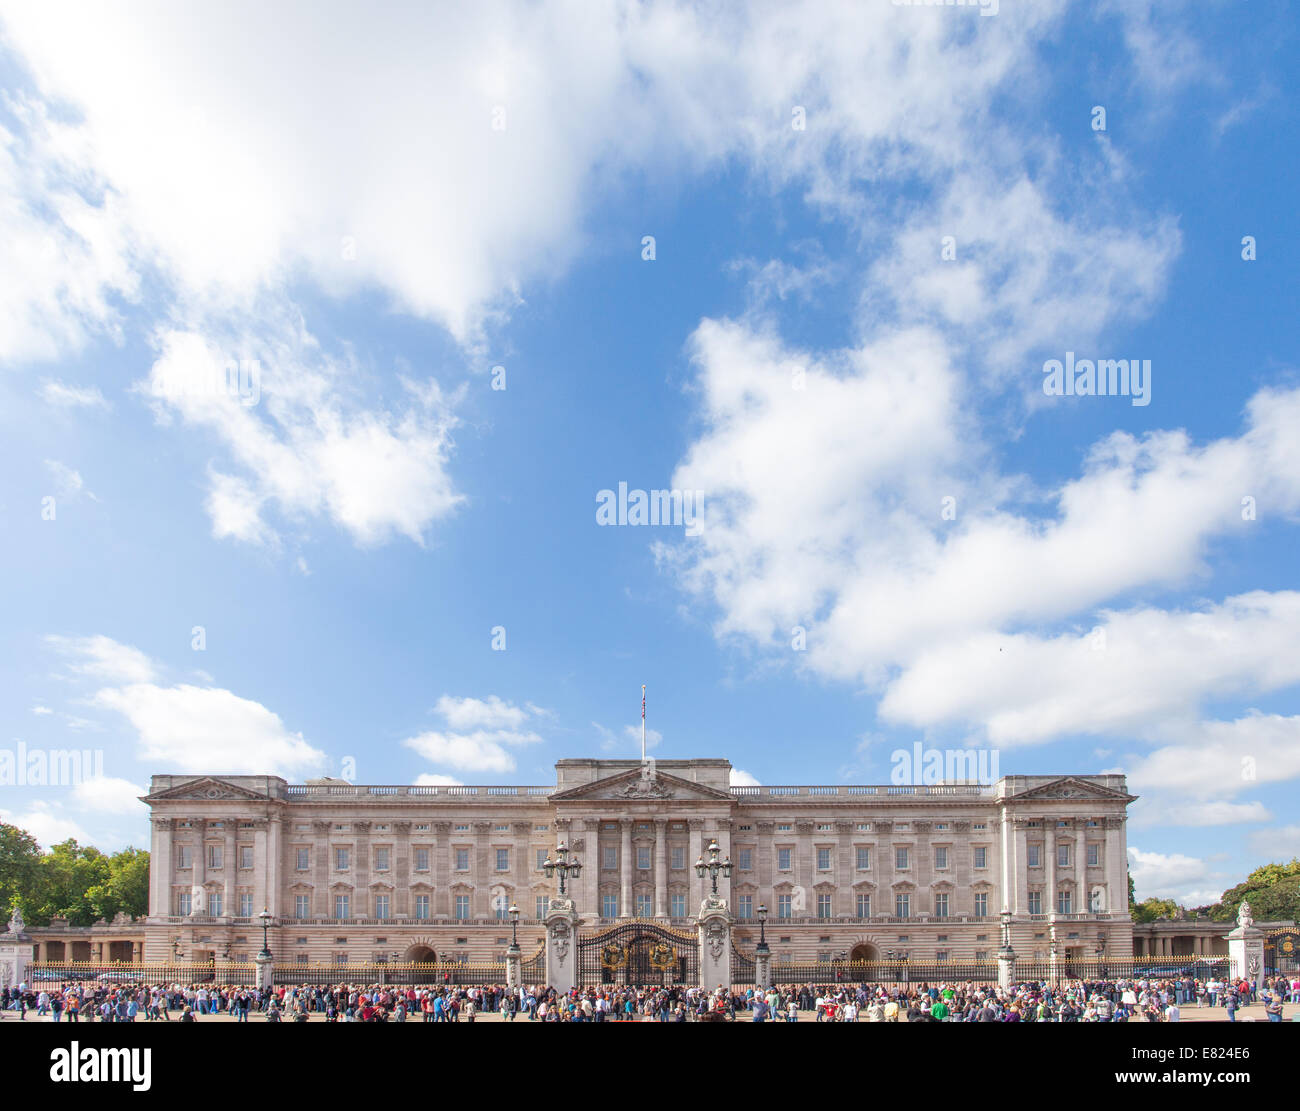 Buckingham Palace with people Stock Photo